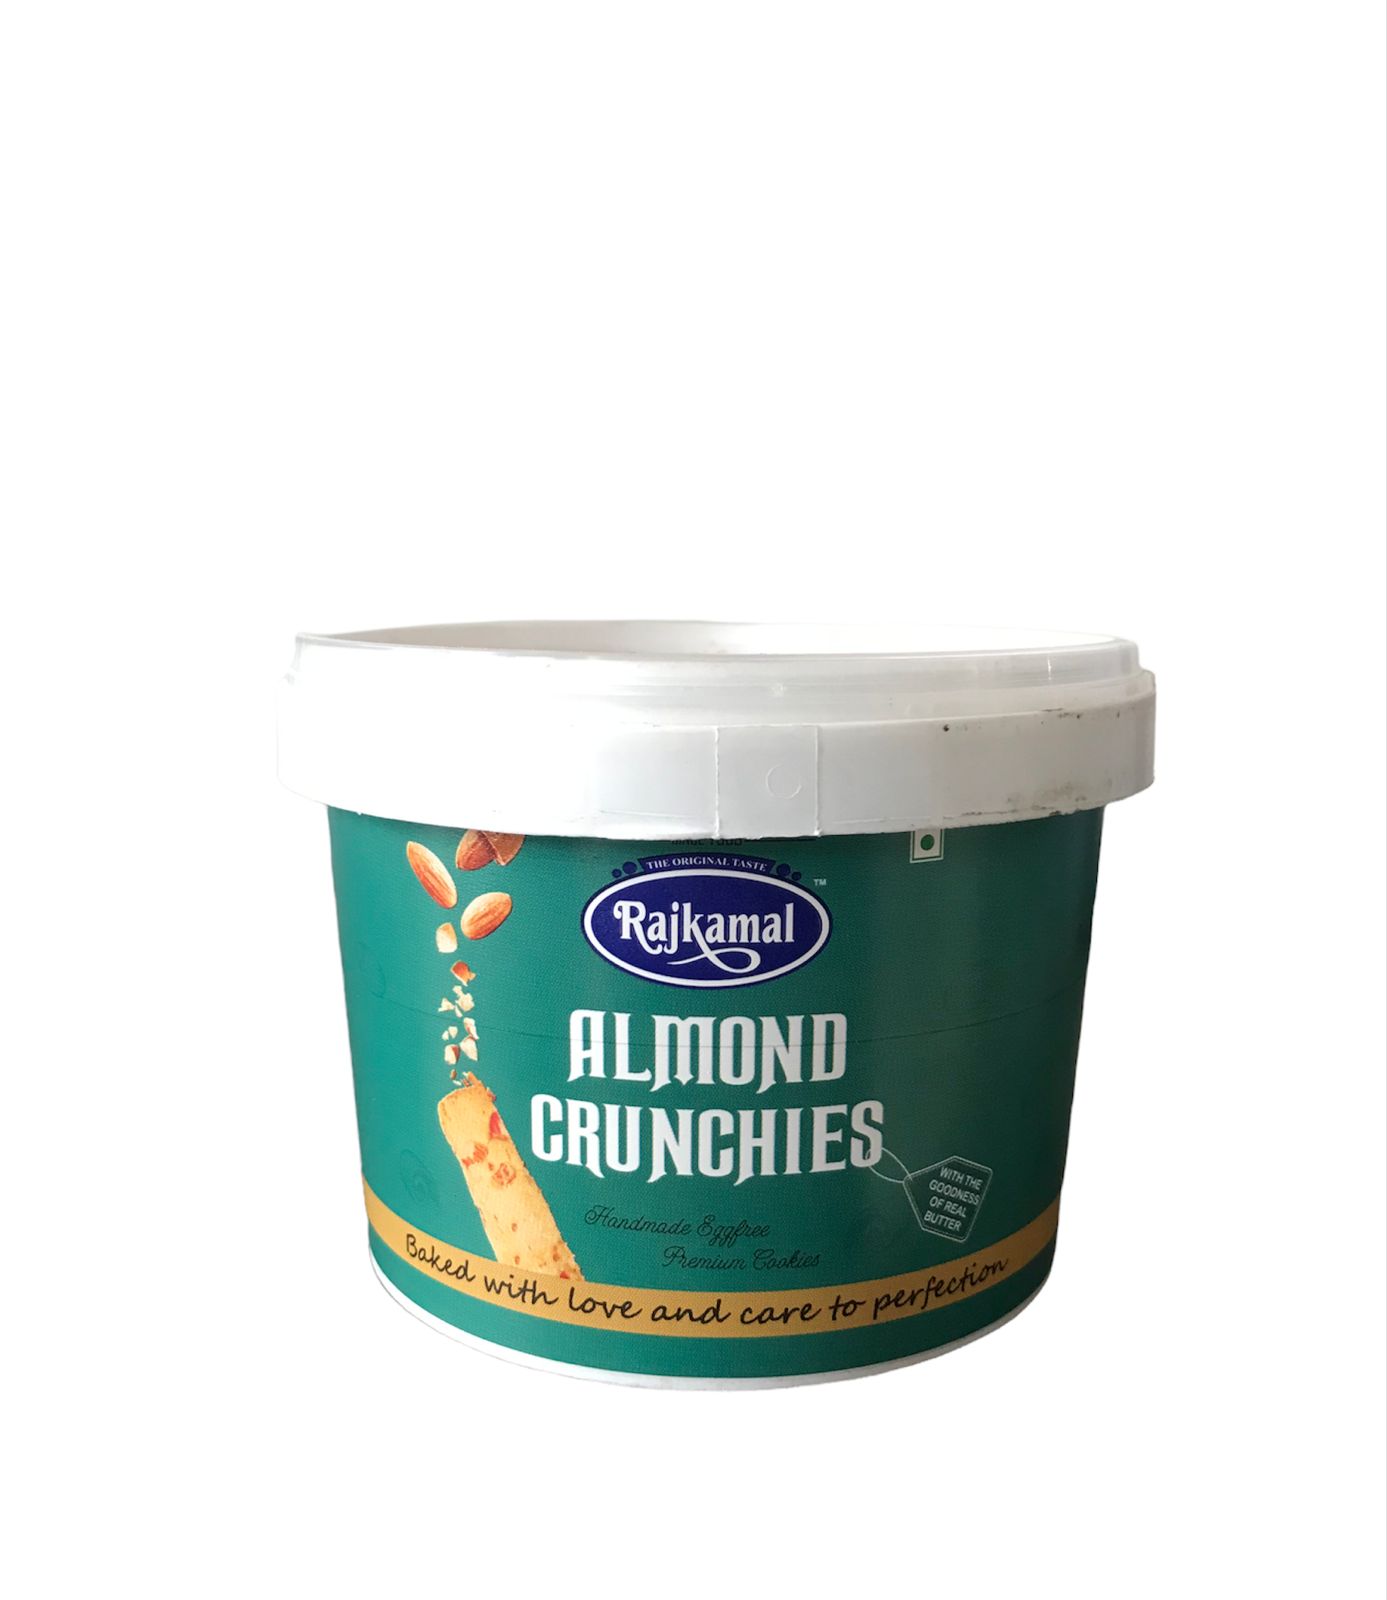 Rajkamal Almond Crunchies